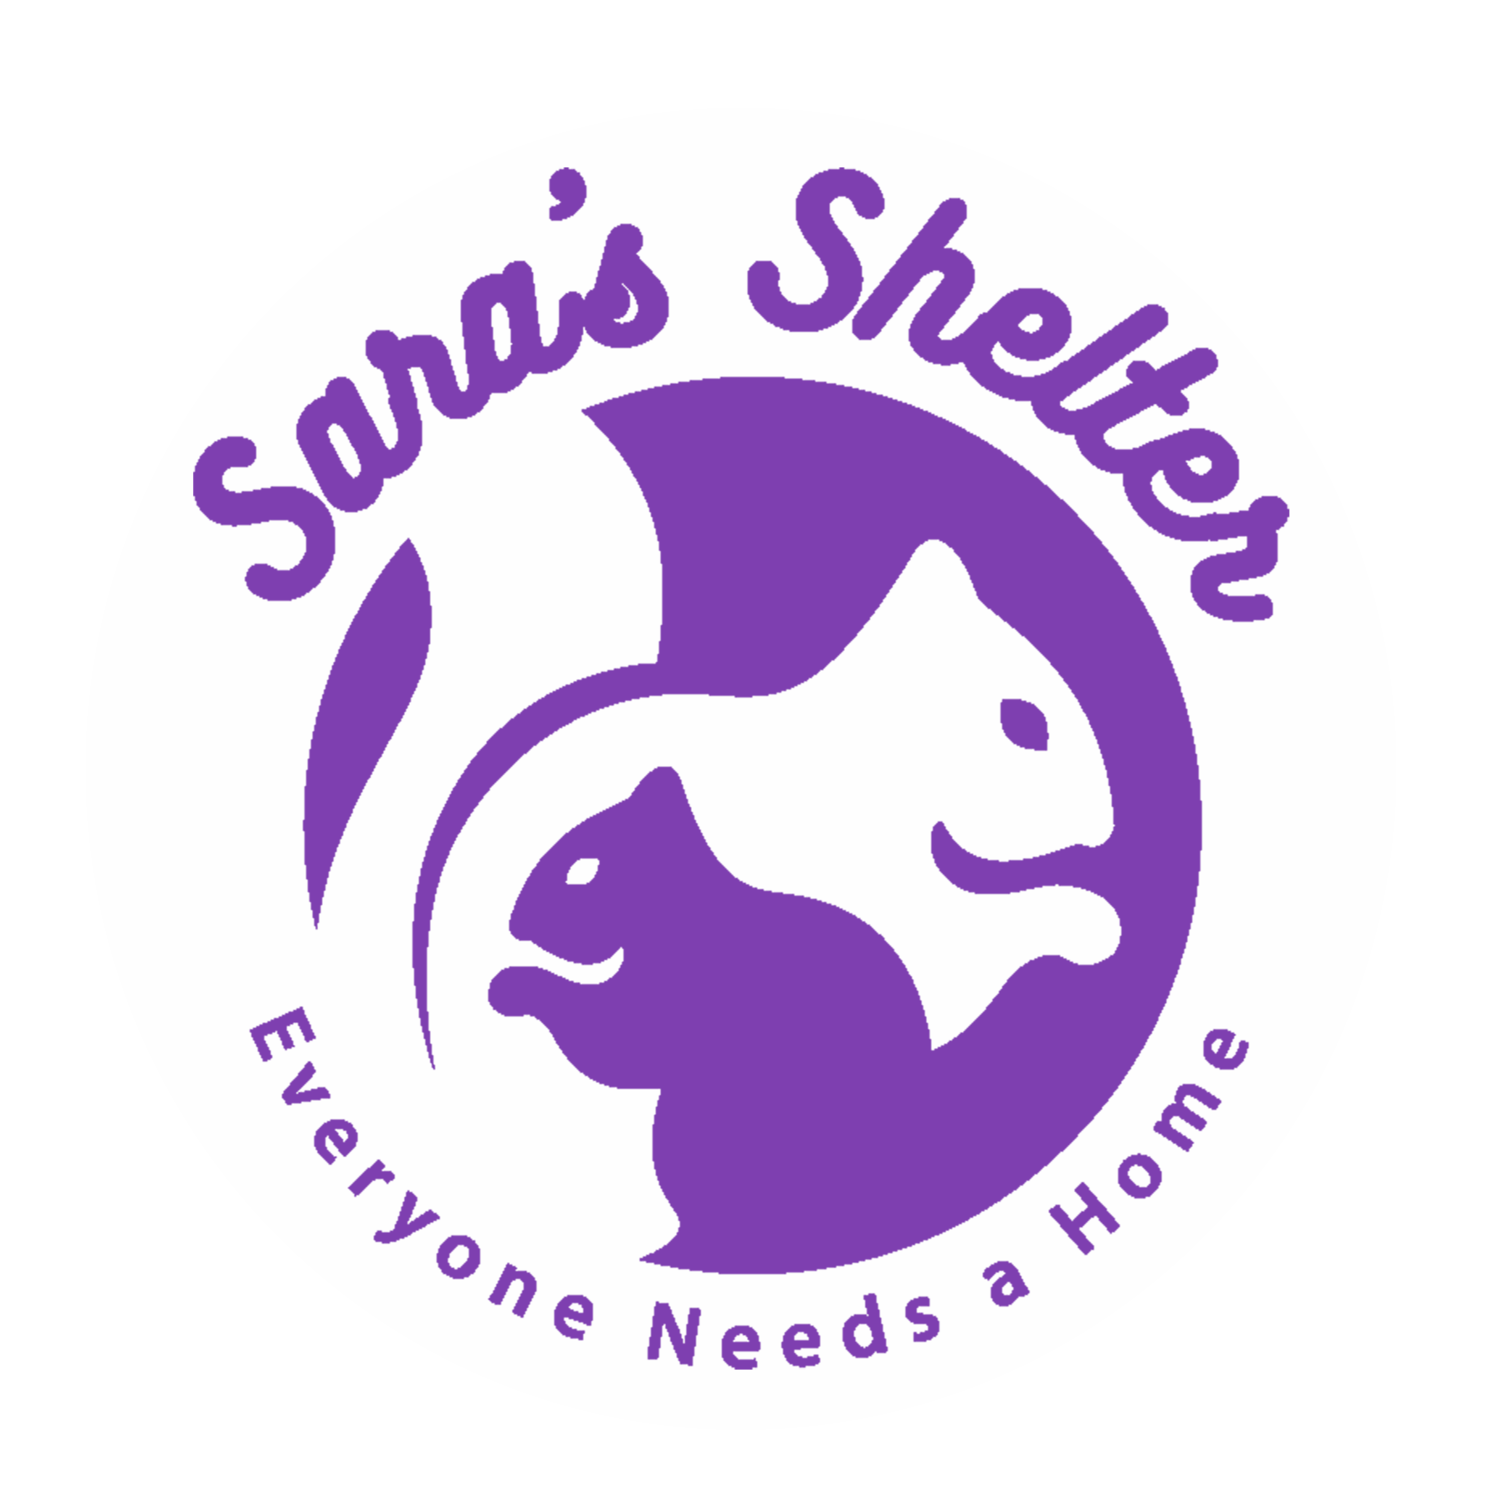 Sara's Shelter